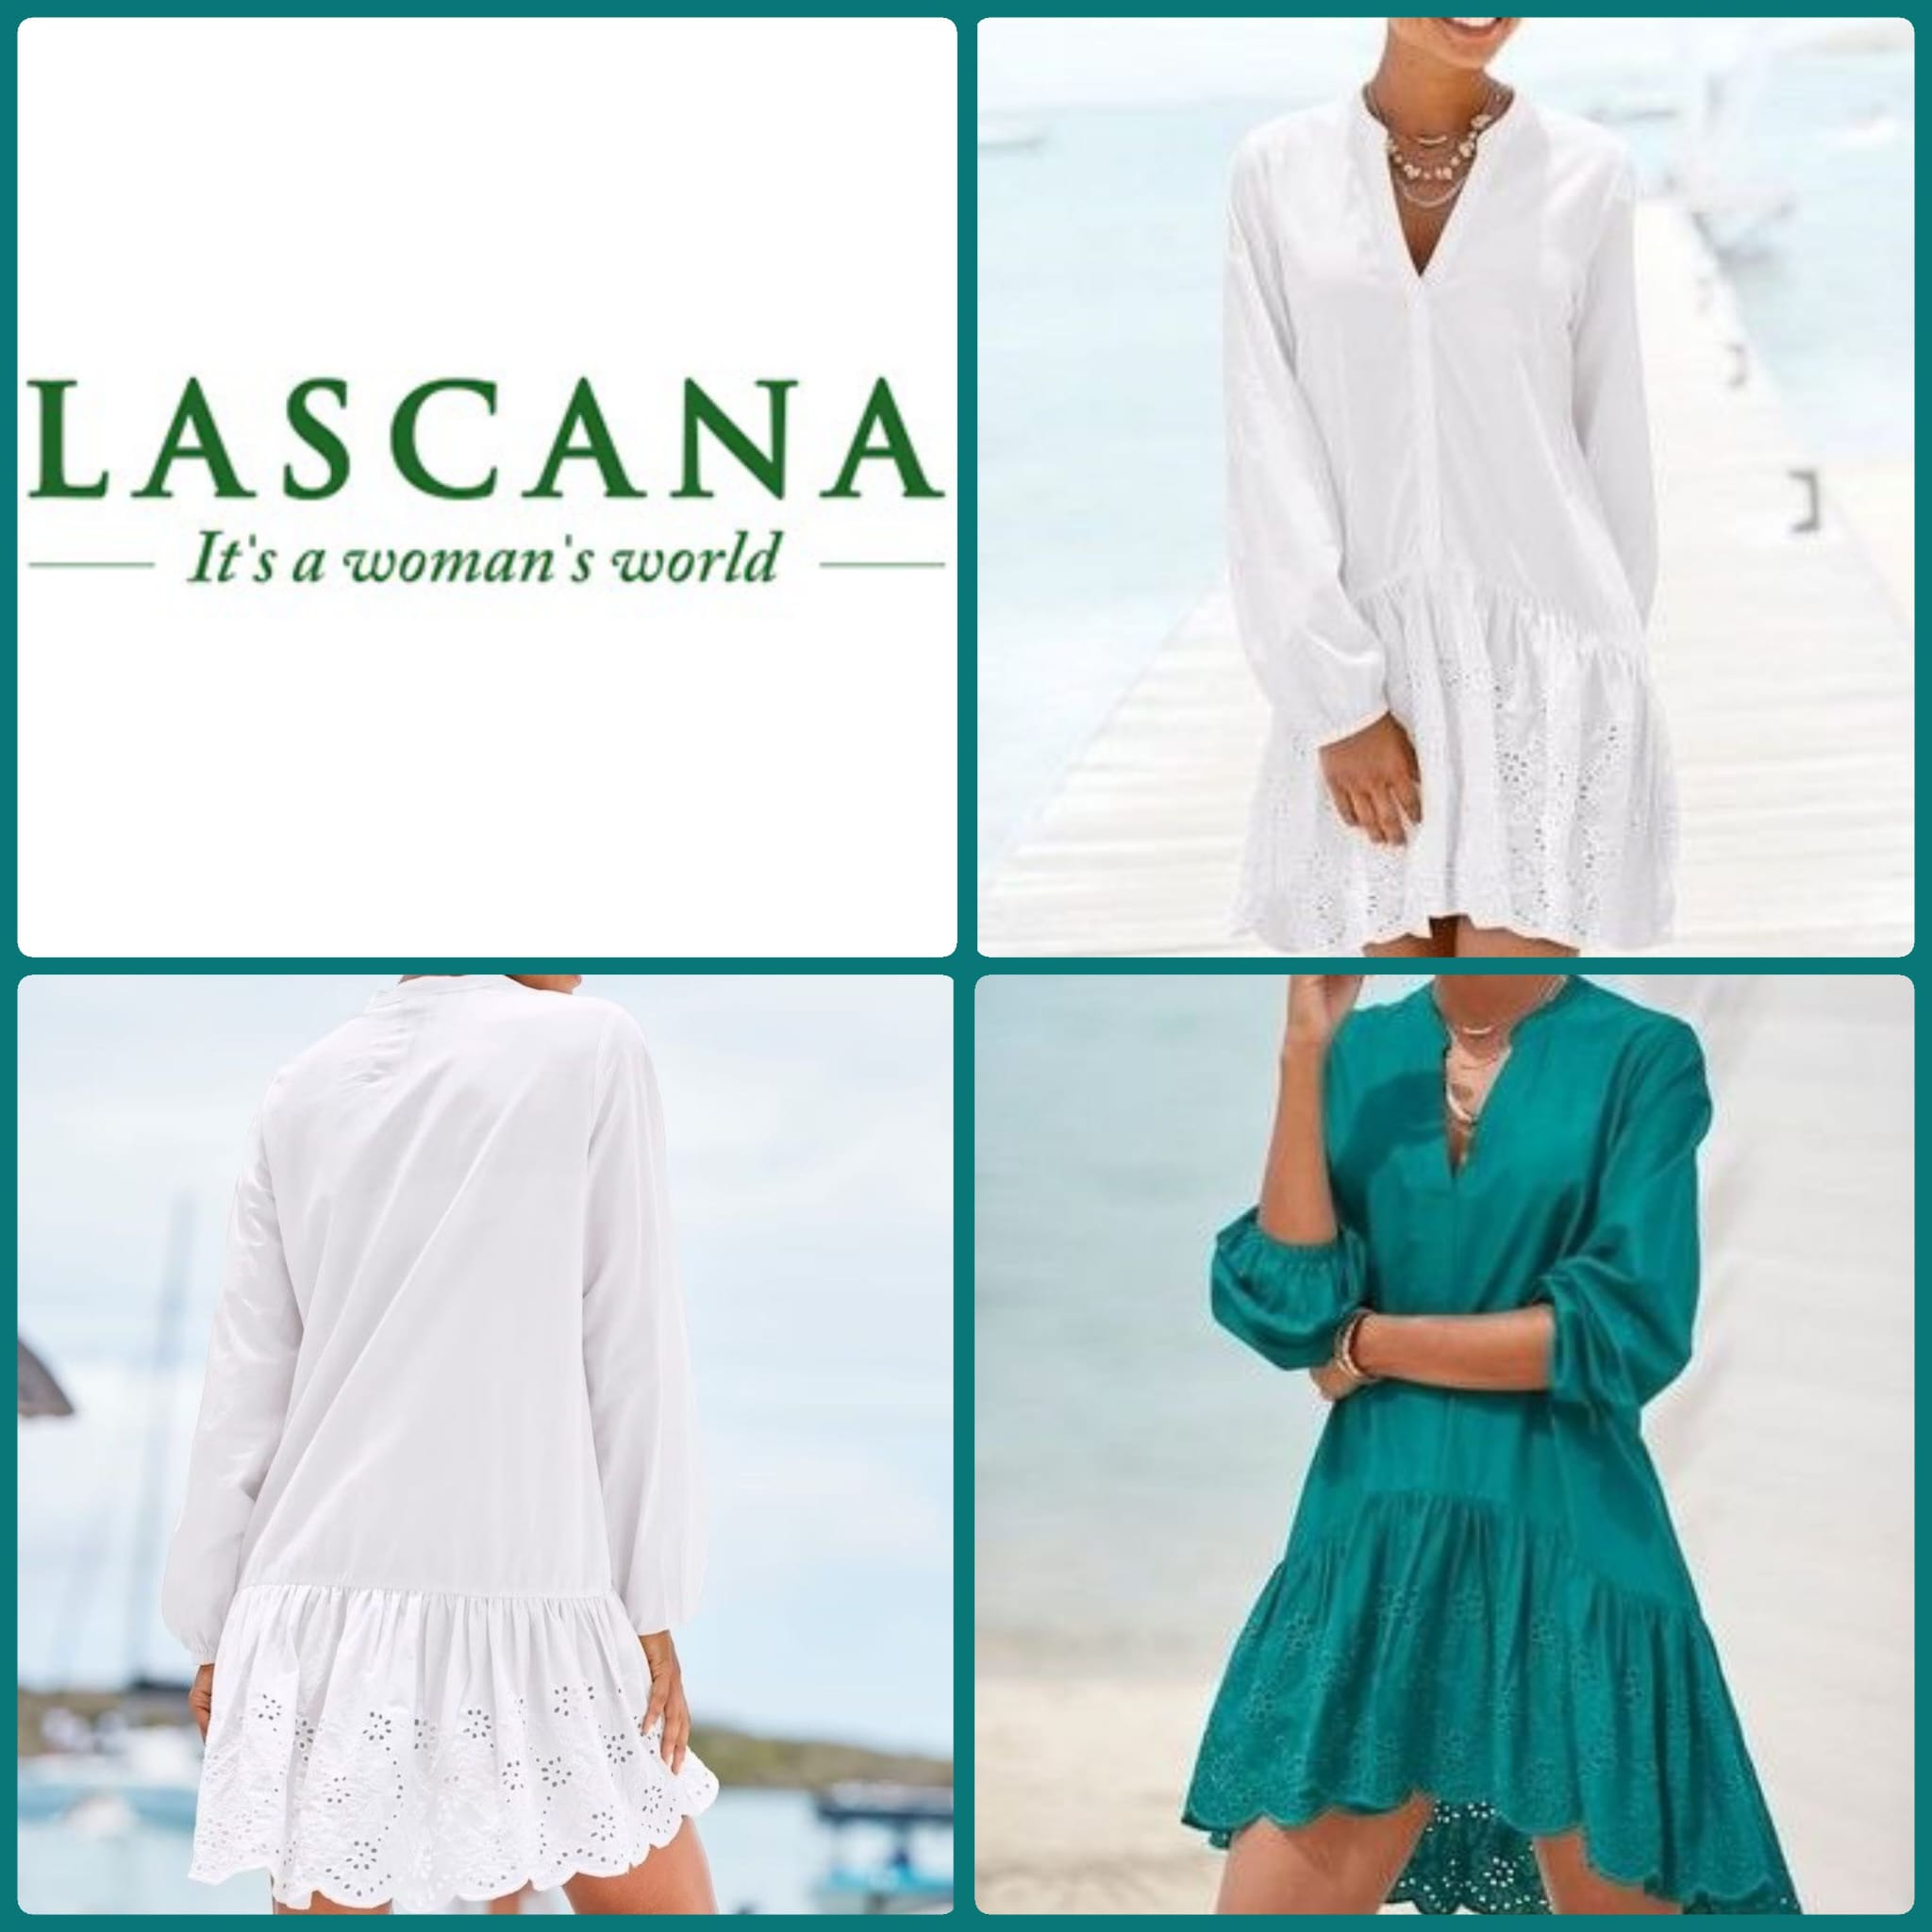 Women's dress by Lascana